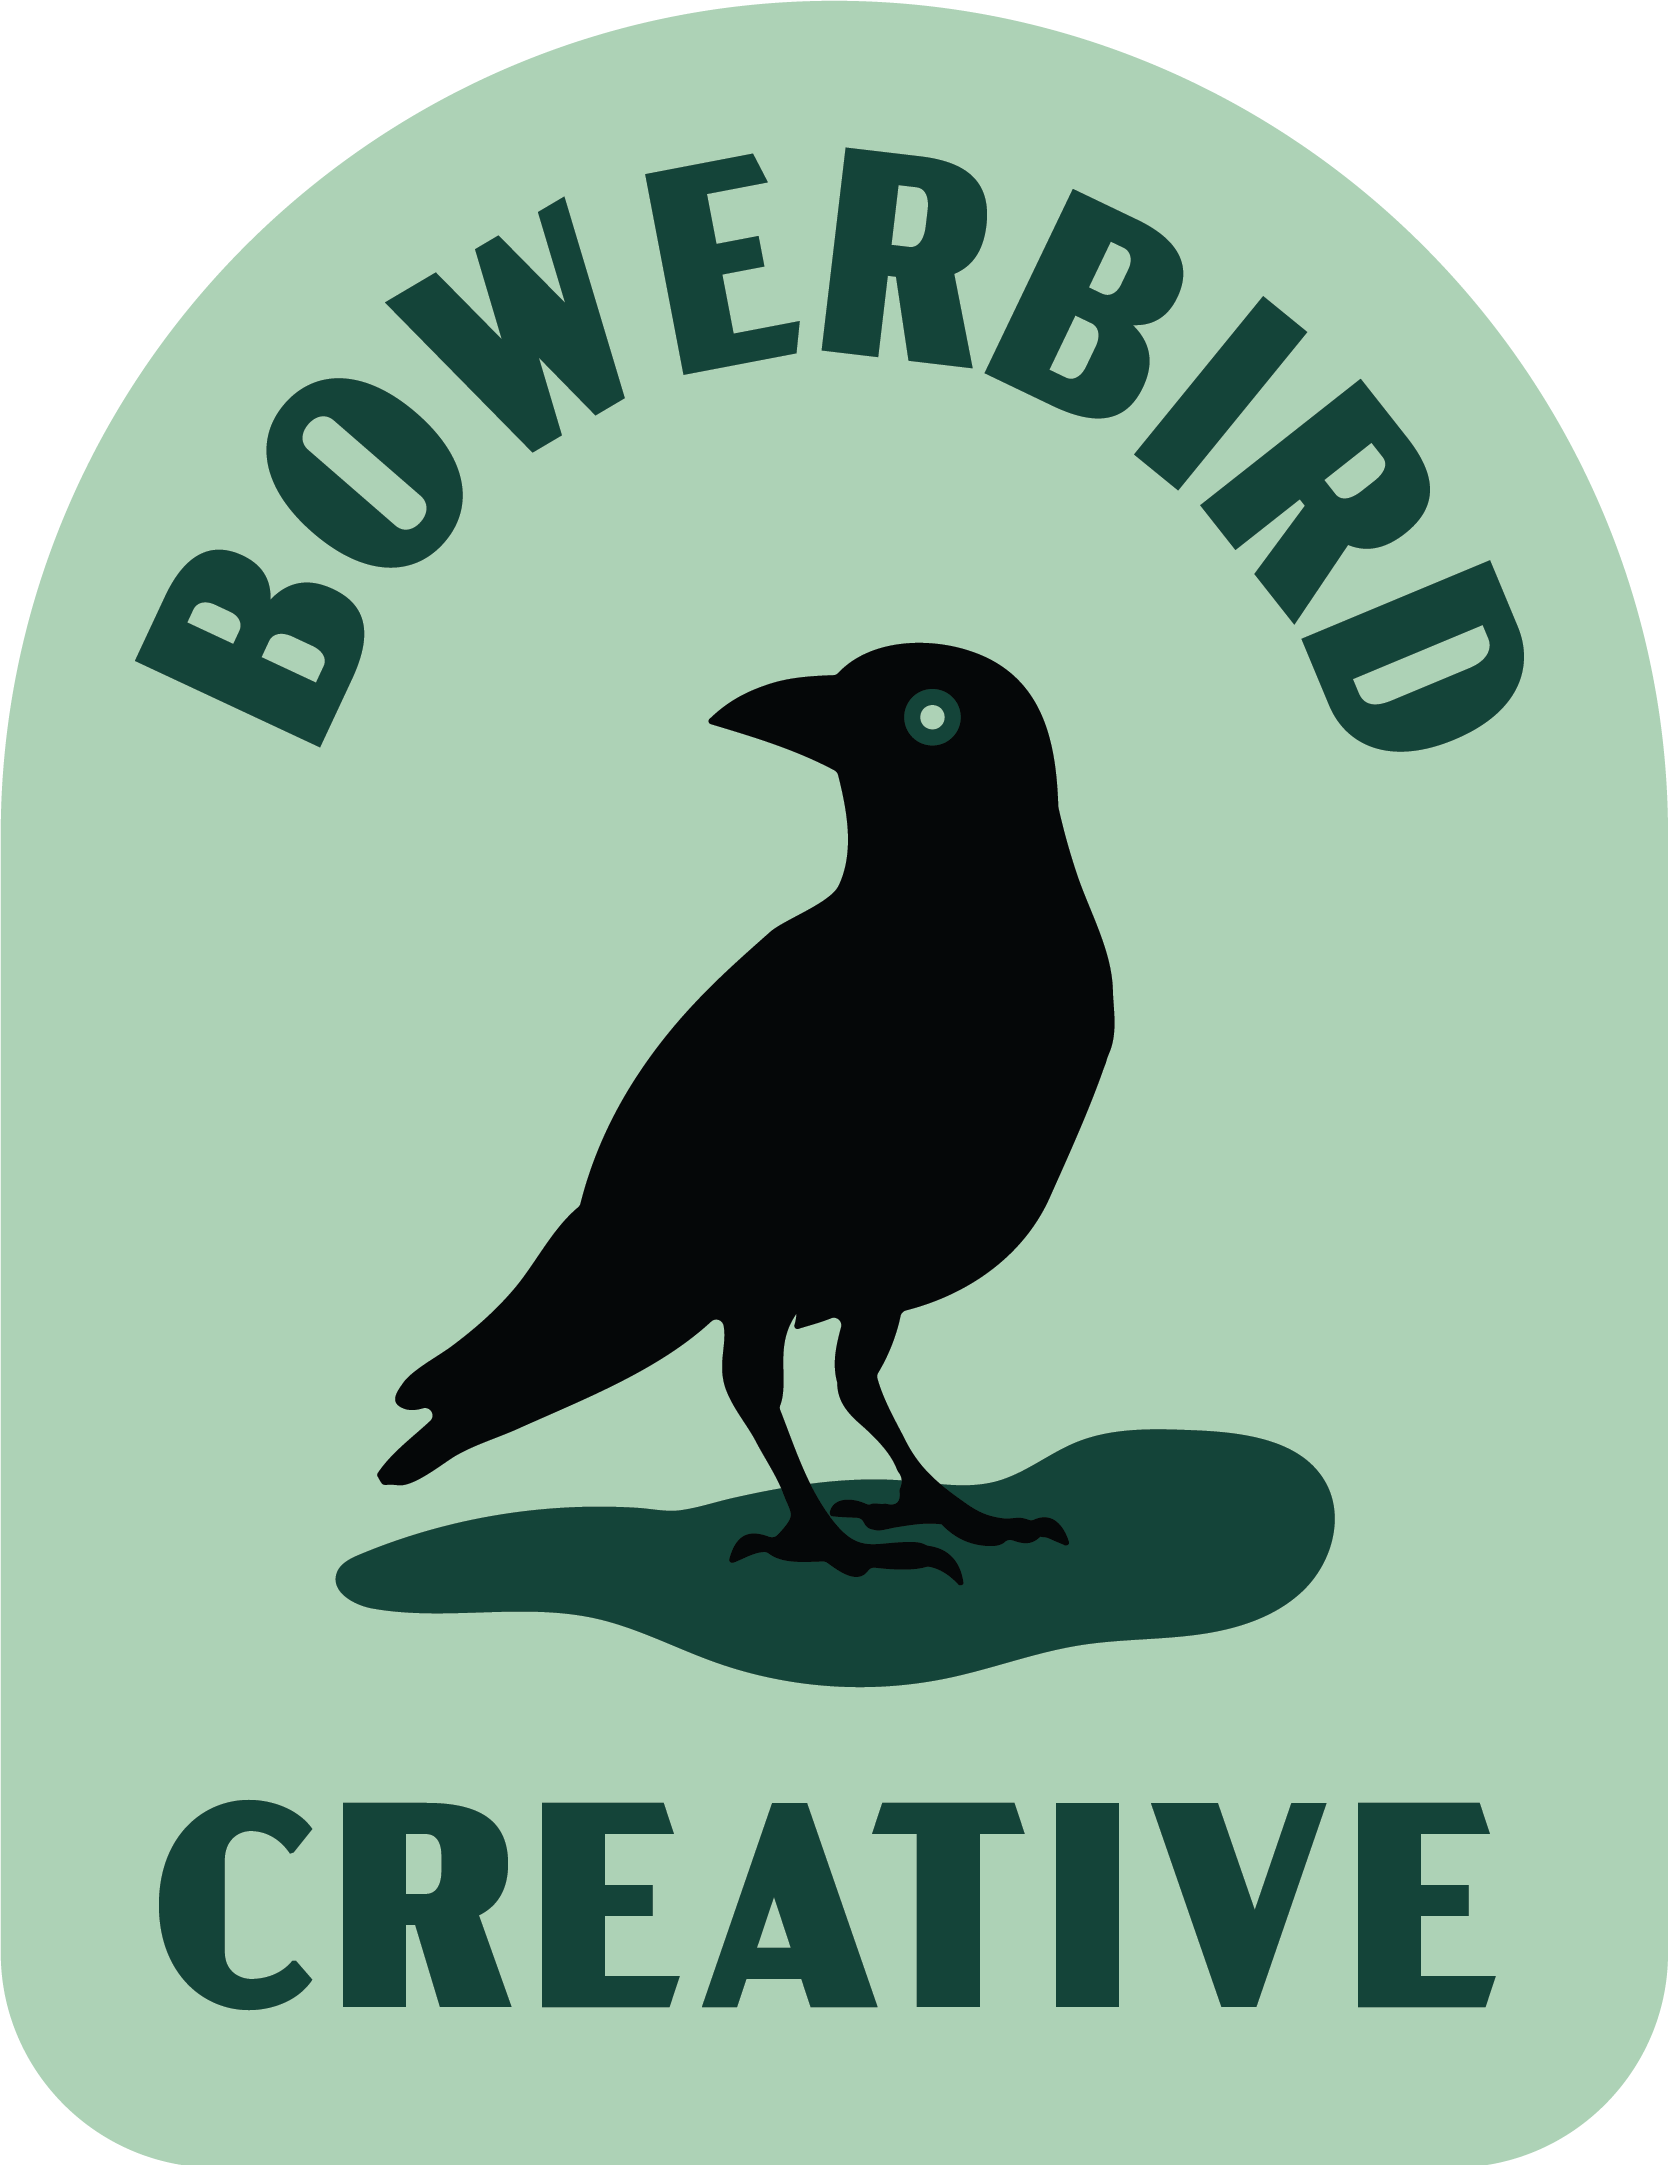 Bowerbird Creative